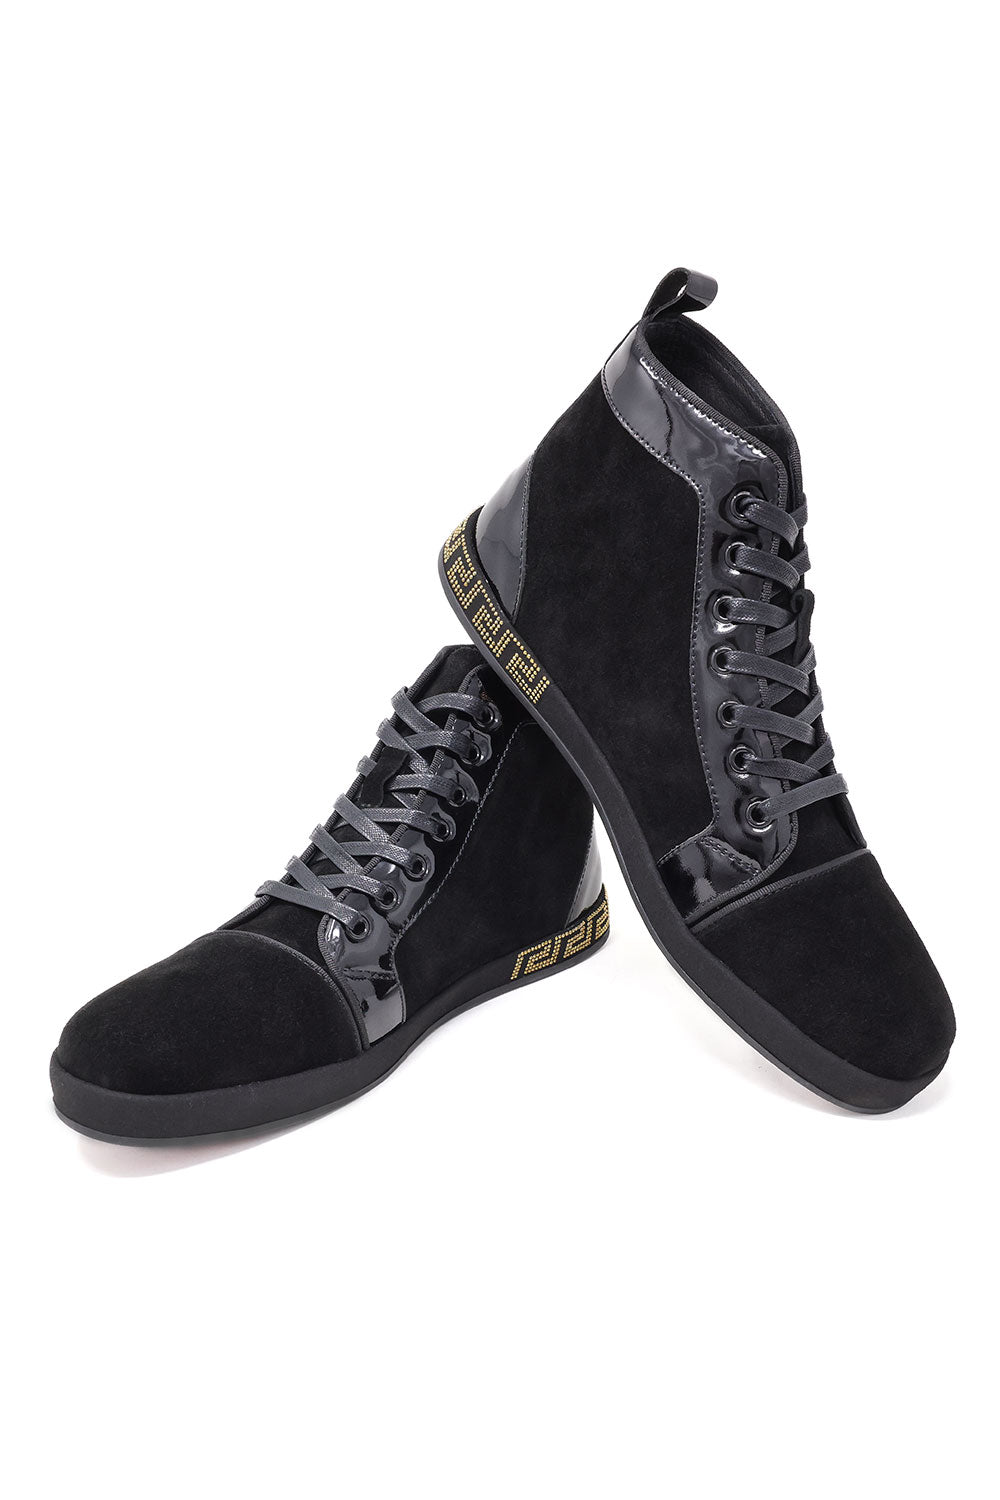 Barabas Men's Rhinestone Grandeur Greek Design High Top Sneakers SH722